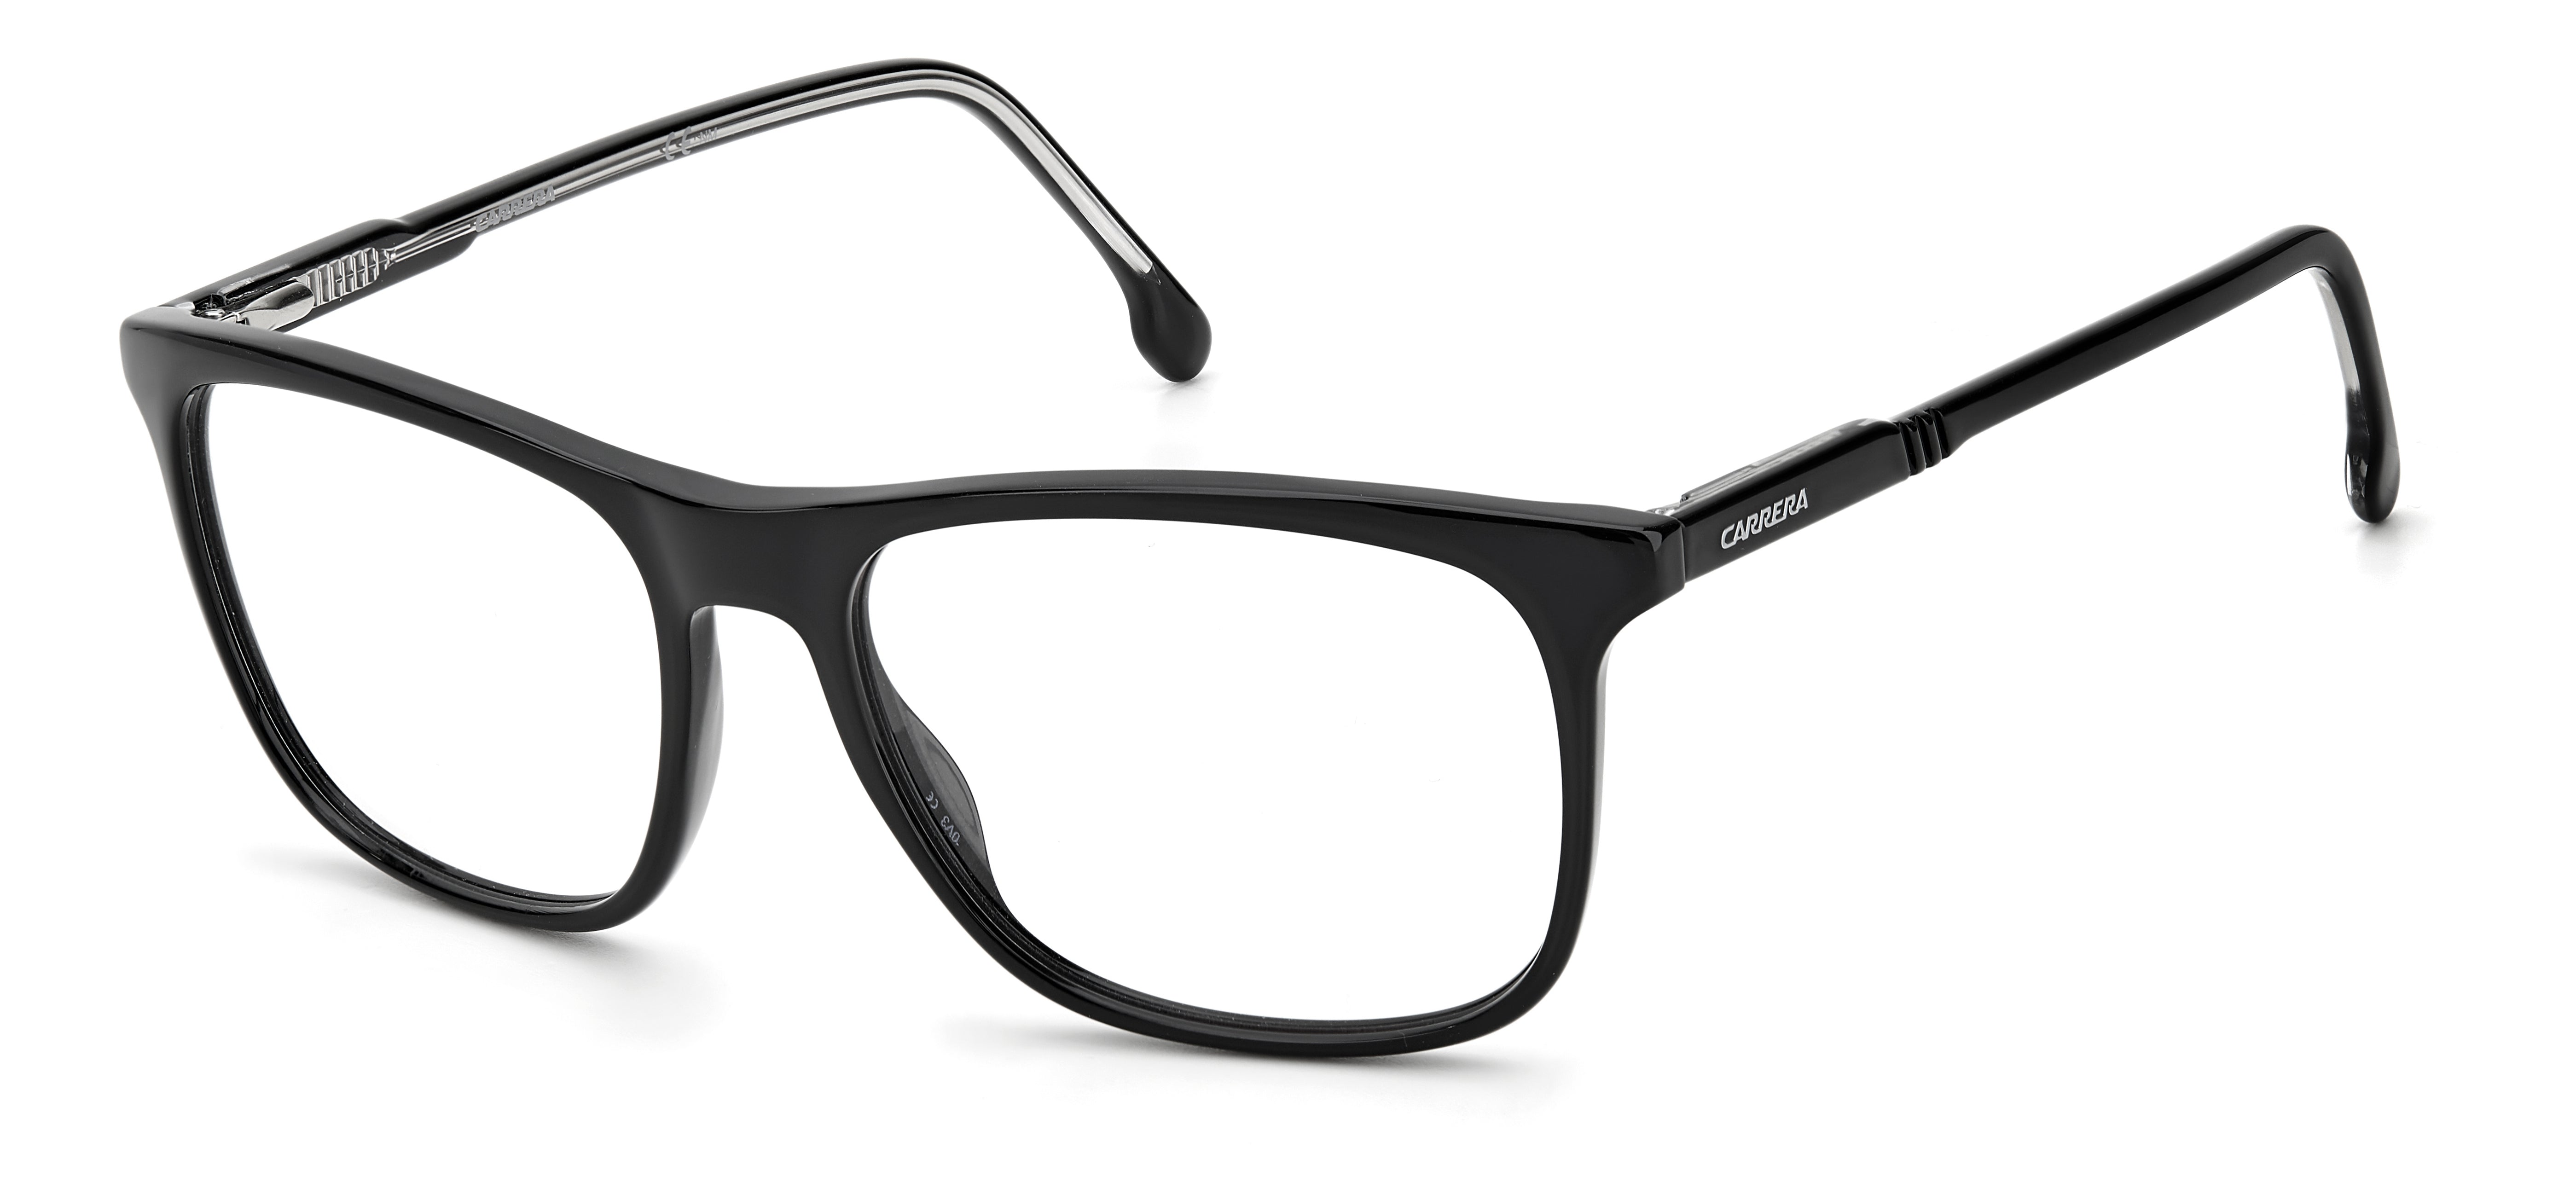 Sunglasses,specsmart, spec smart, glasses, eye glasses glasses frames, where to get glasses in lagos, eye treatment, wellness health care group, carrera 1125